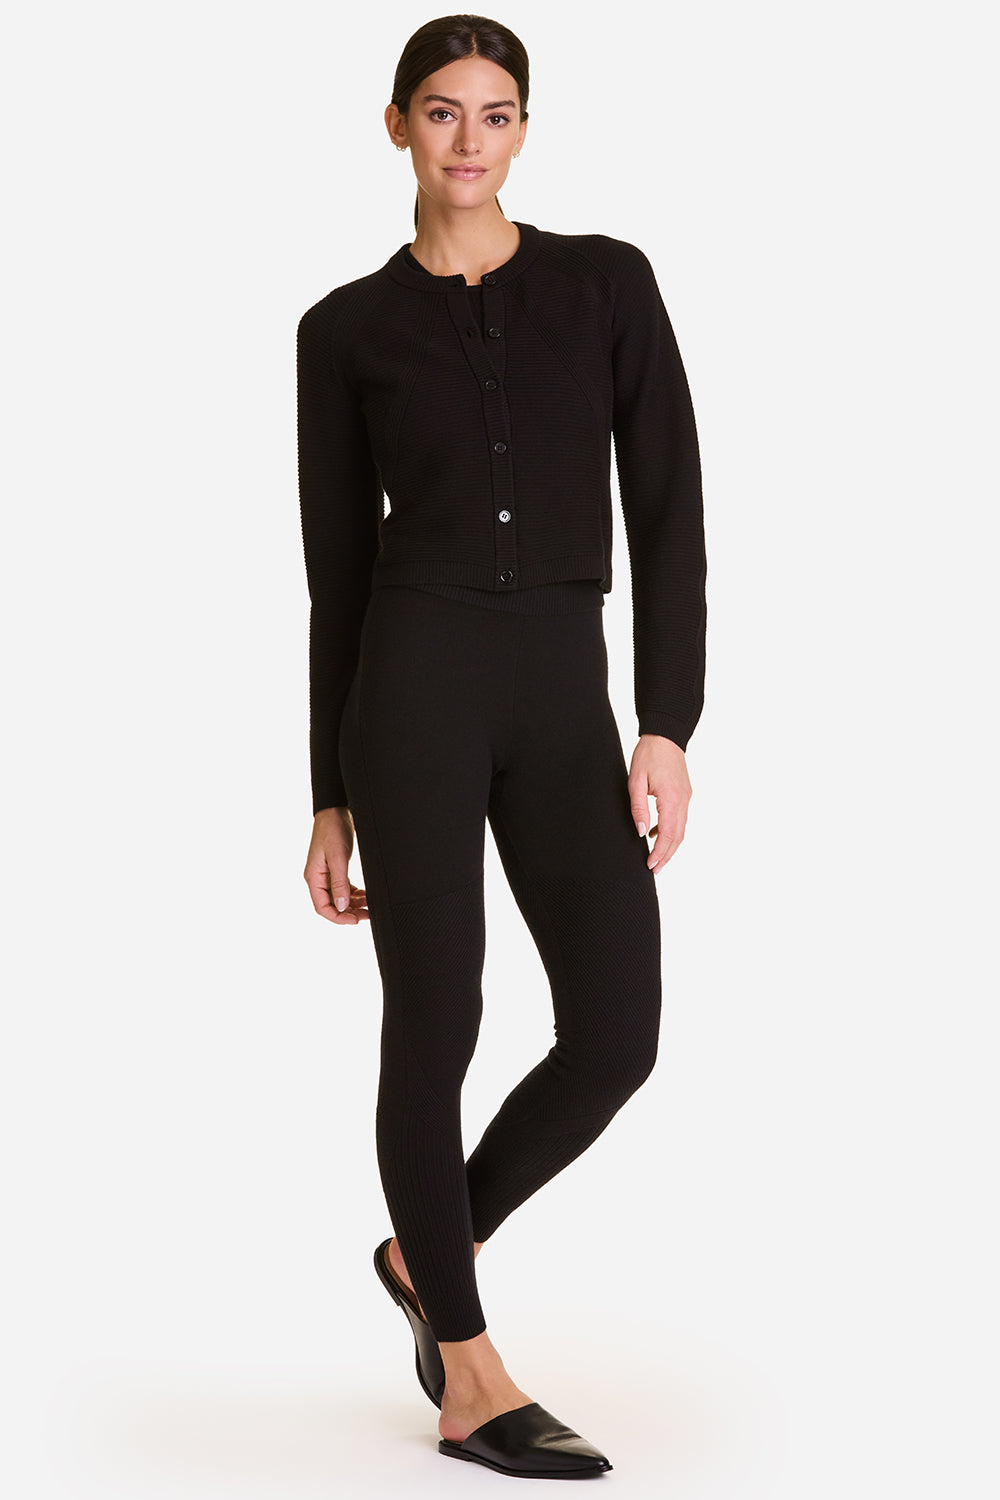 Alala cashmere cardigan in black